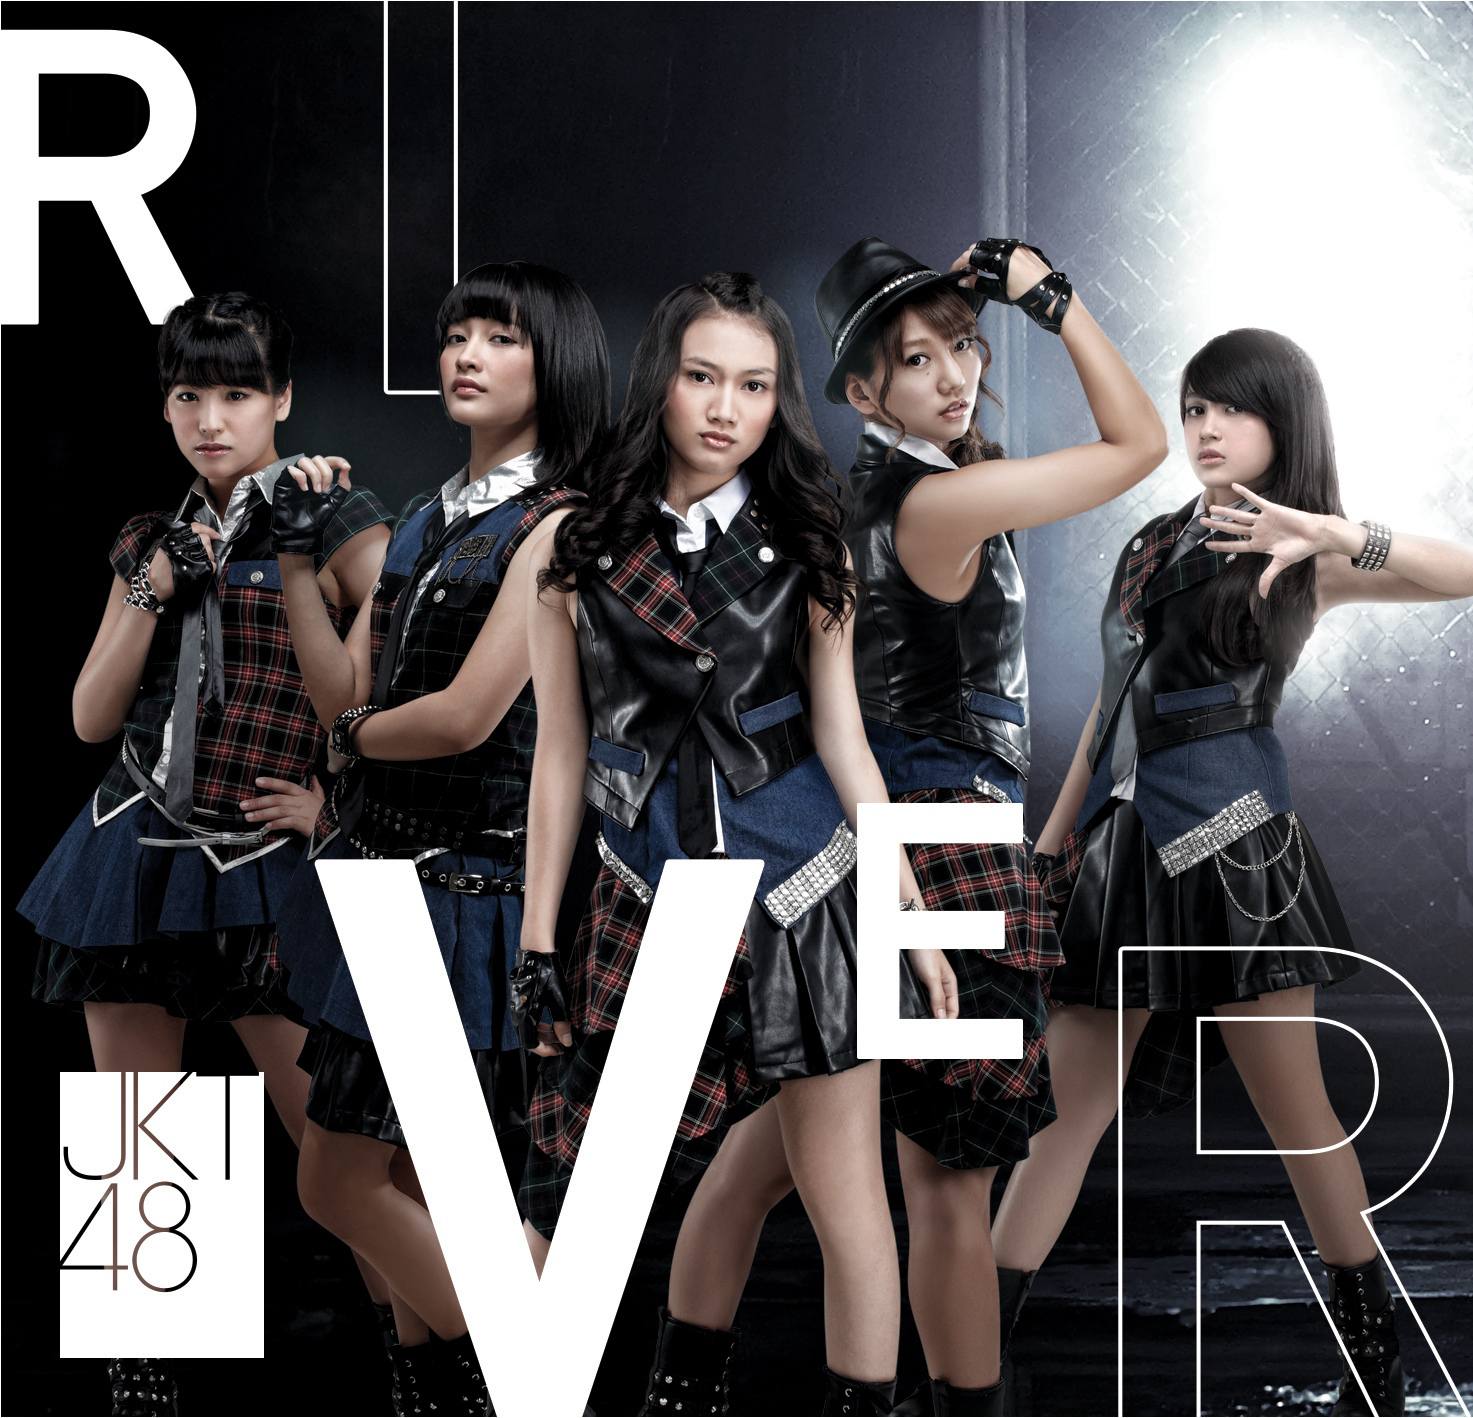 [Download] JKT48 Full Album RIVER | FanBase JKT48 Indonesia